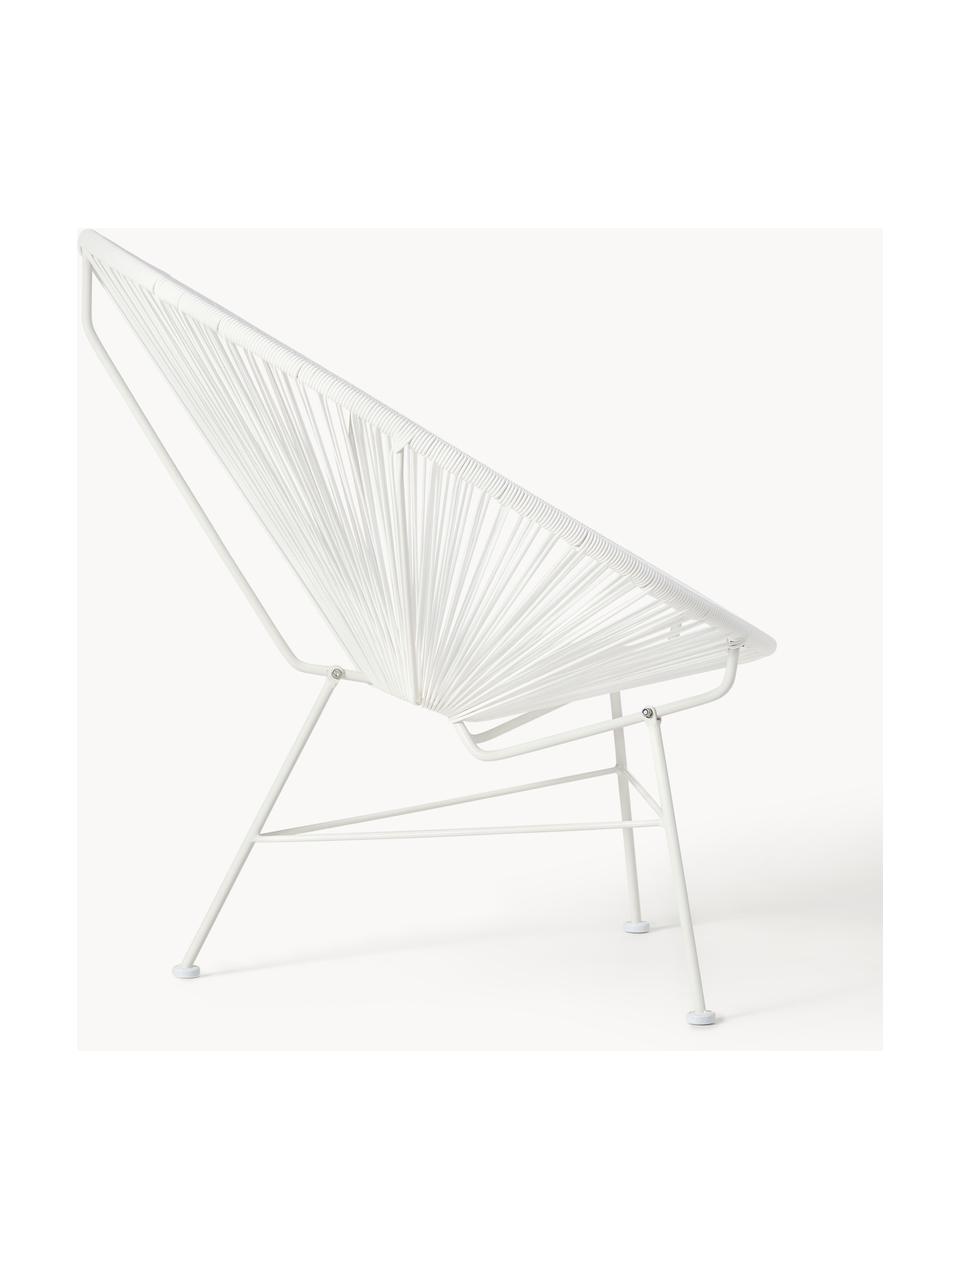 Loungesessel Bahia aus Kunststoff-Geflecht, Sitzfläche: Kunststoff, Gestell: Metall, pulverbeschichtet, Weiss, B 81 x T 73 cm